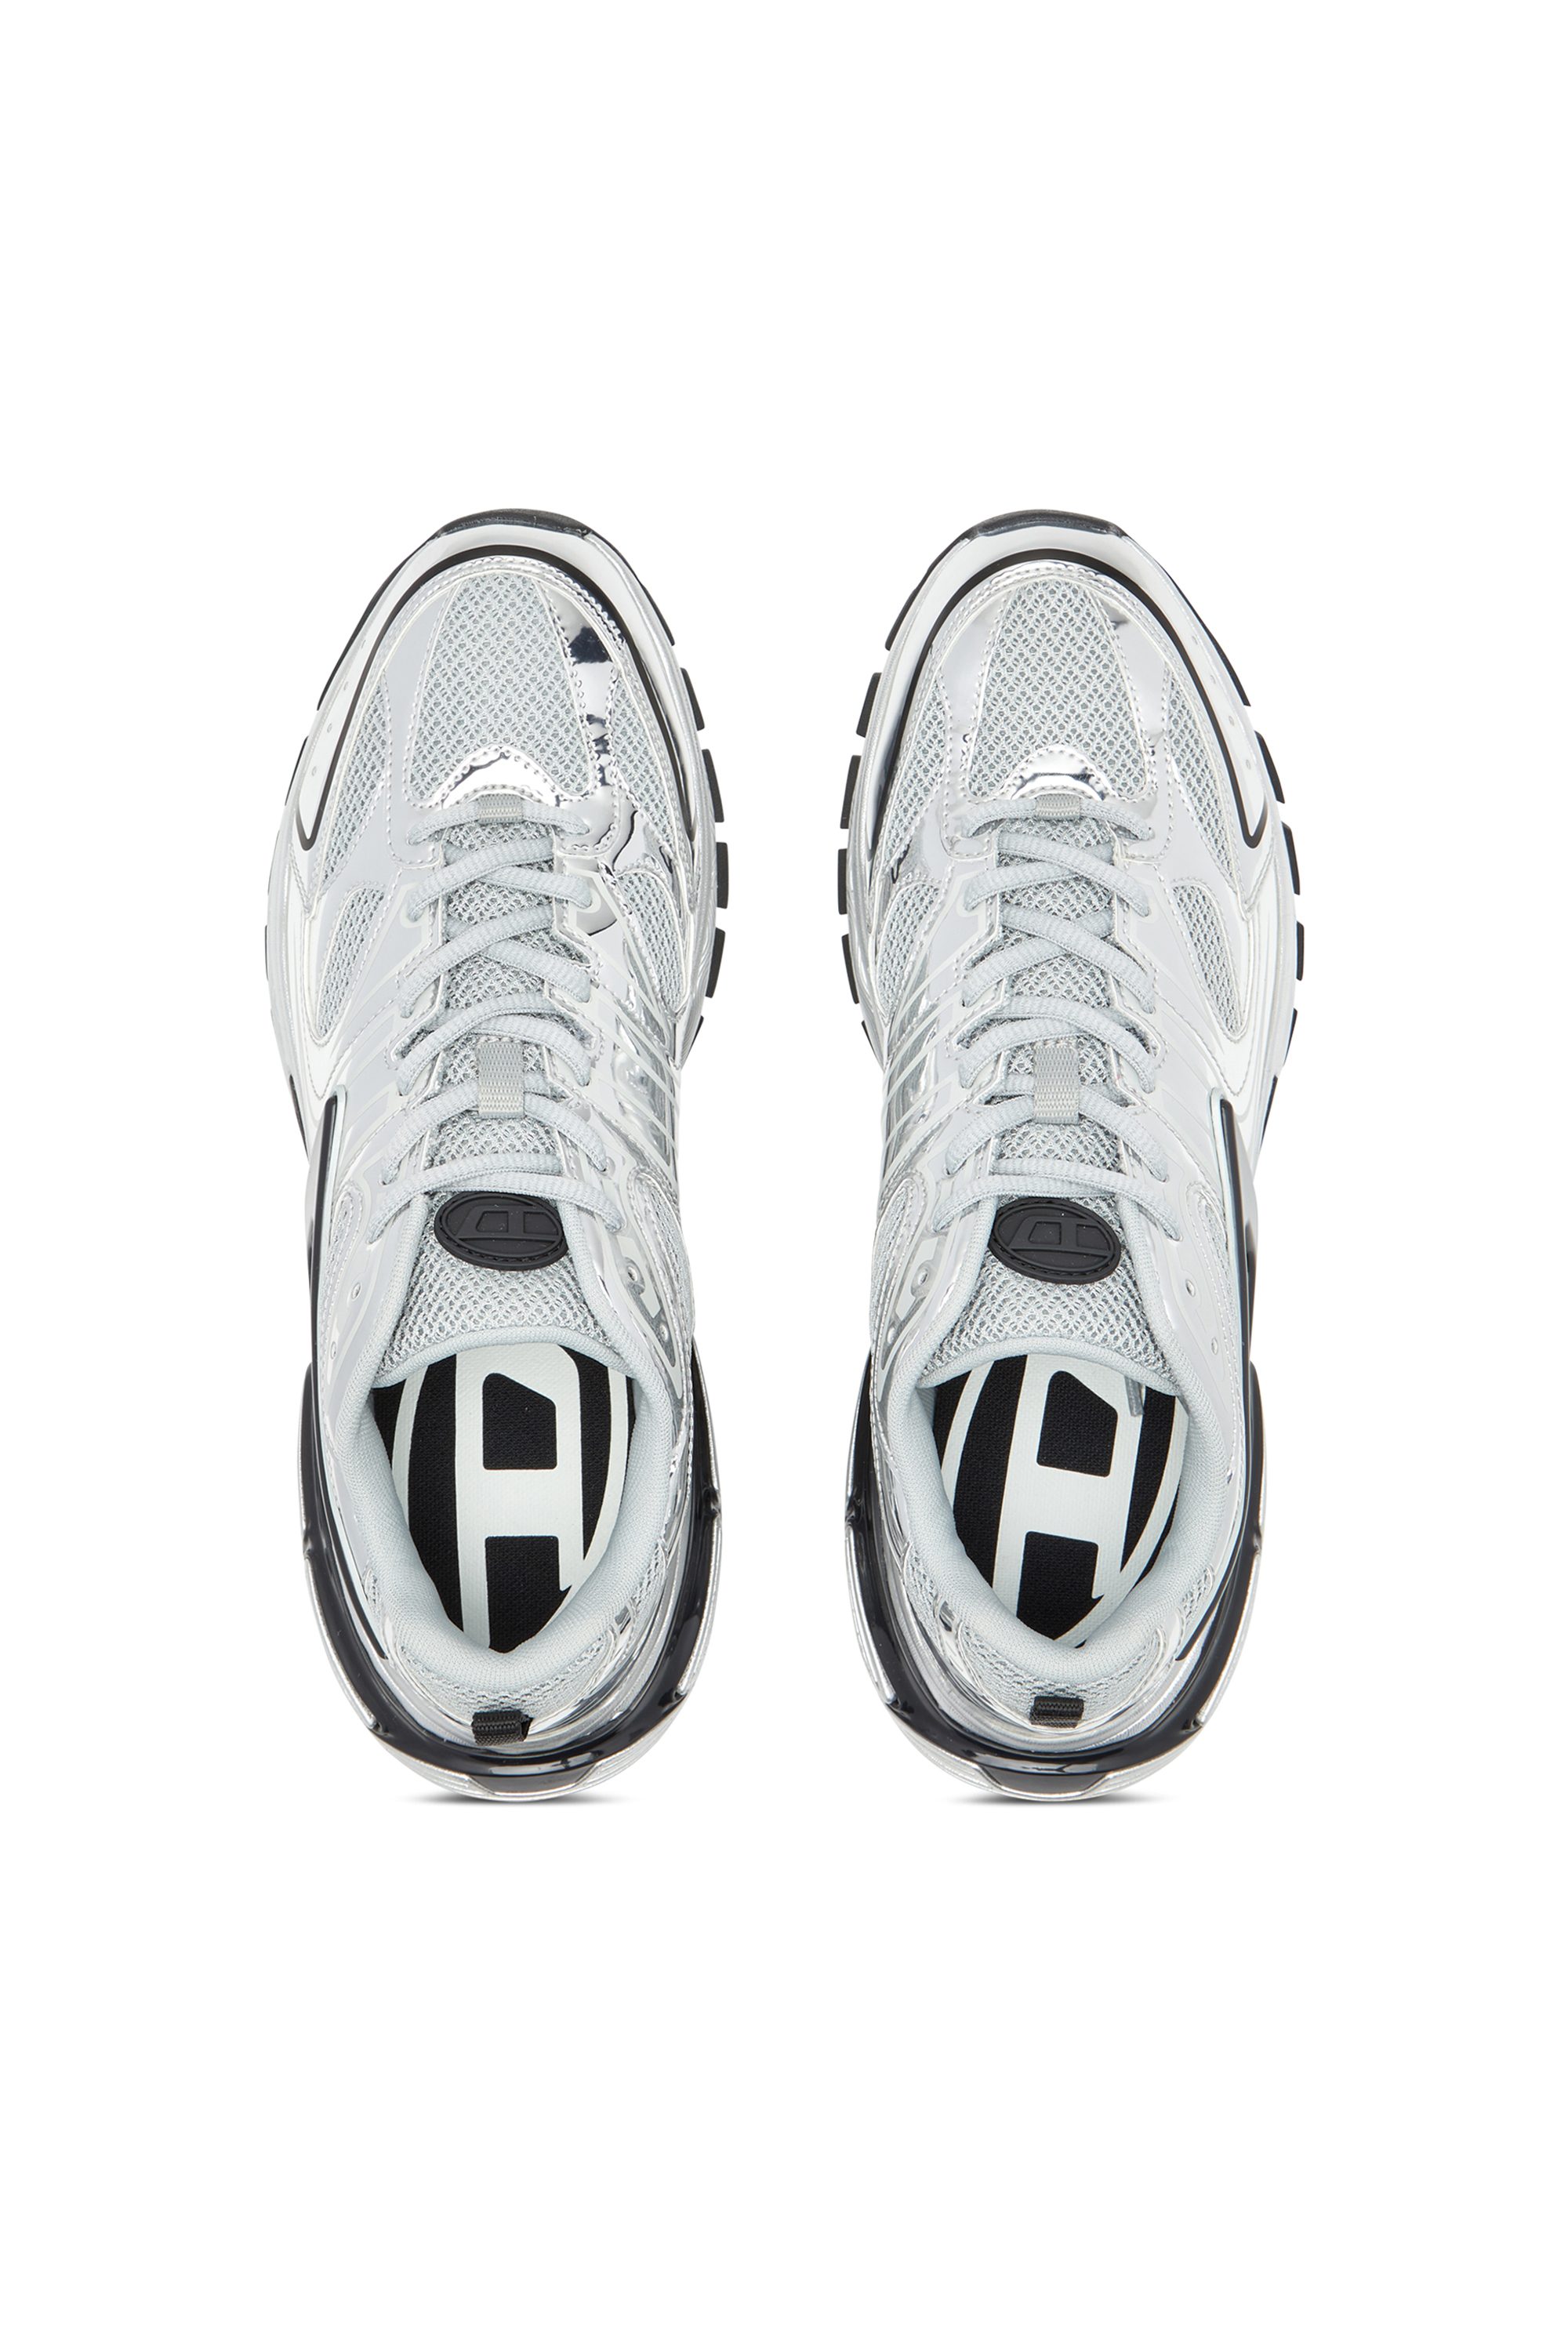 Diesel - S-SERENDIPITY PRO-X1, Male S-Serendipity-Mesh sneakers with metallic overlays in マルチカラー - Image 5